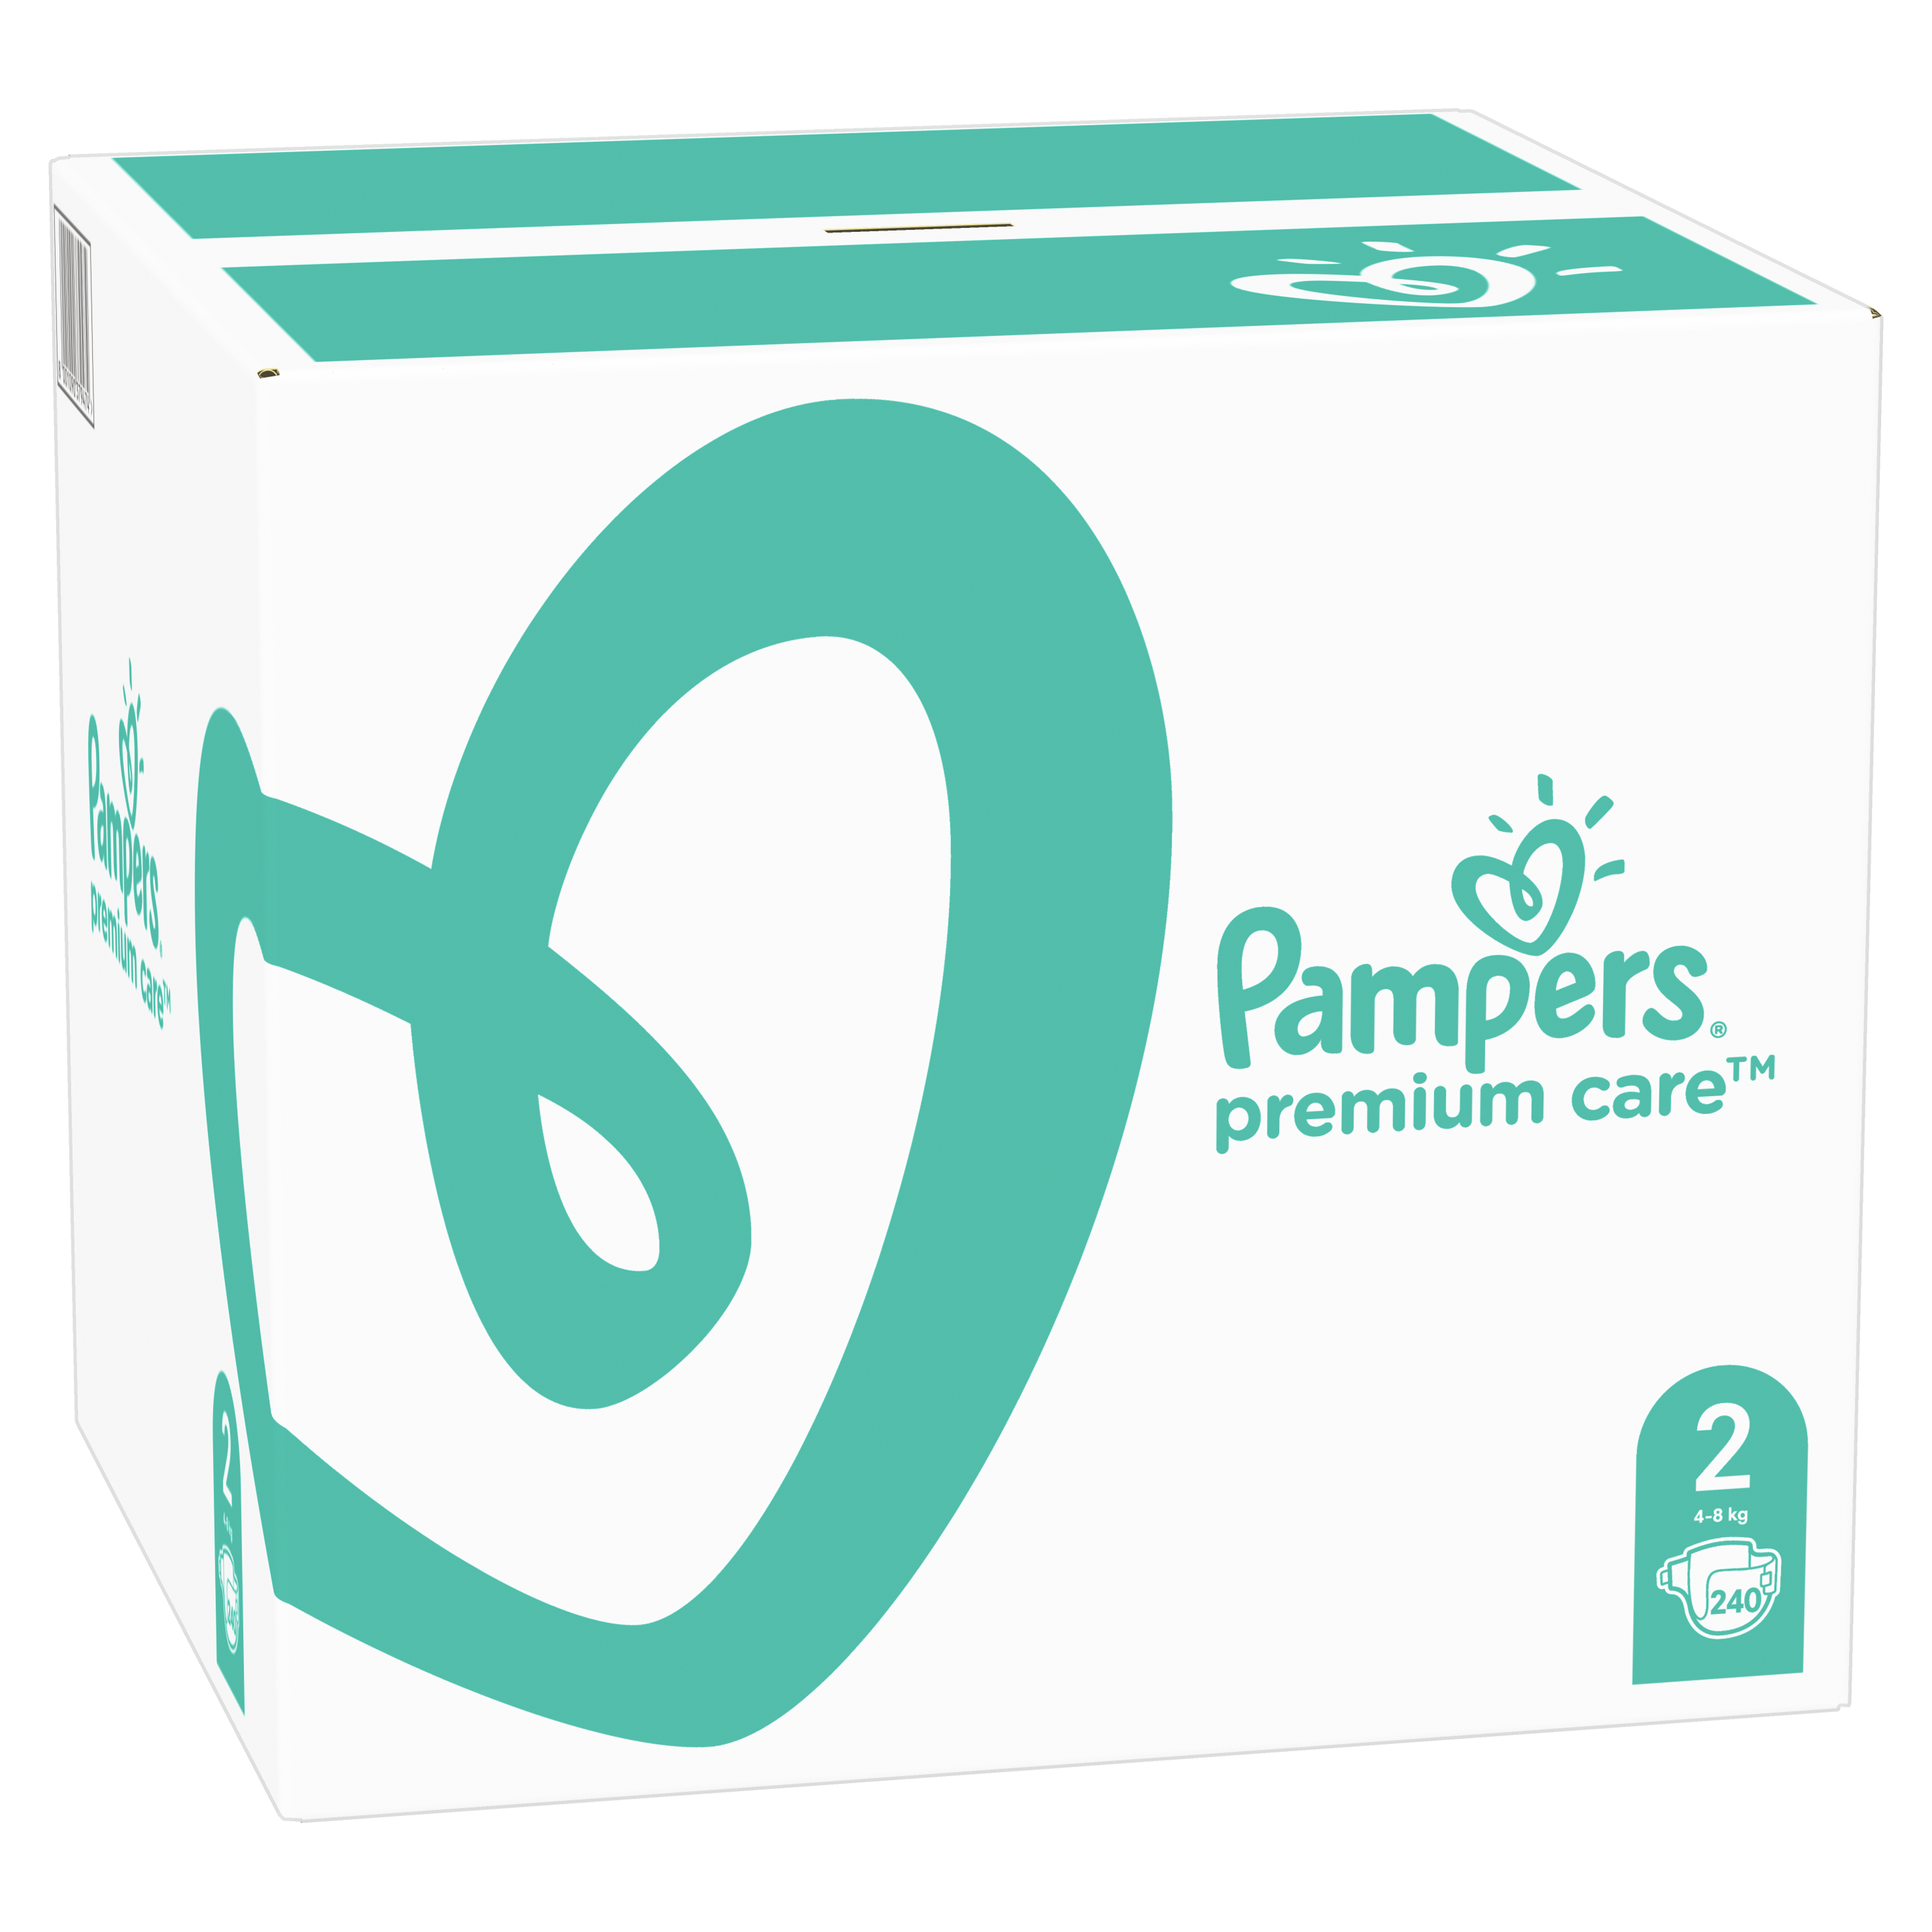 Подгузники Pampers Premium Care 2 (4-8 кг), 240 шт. - фото 2